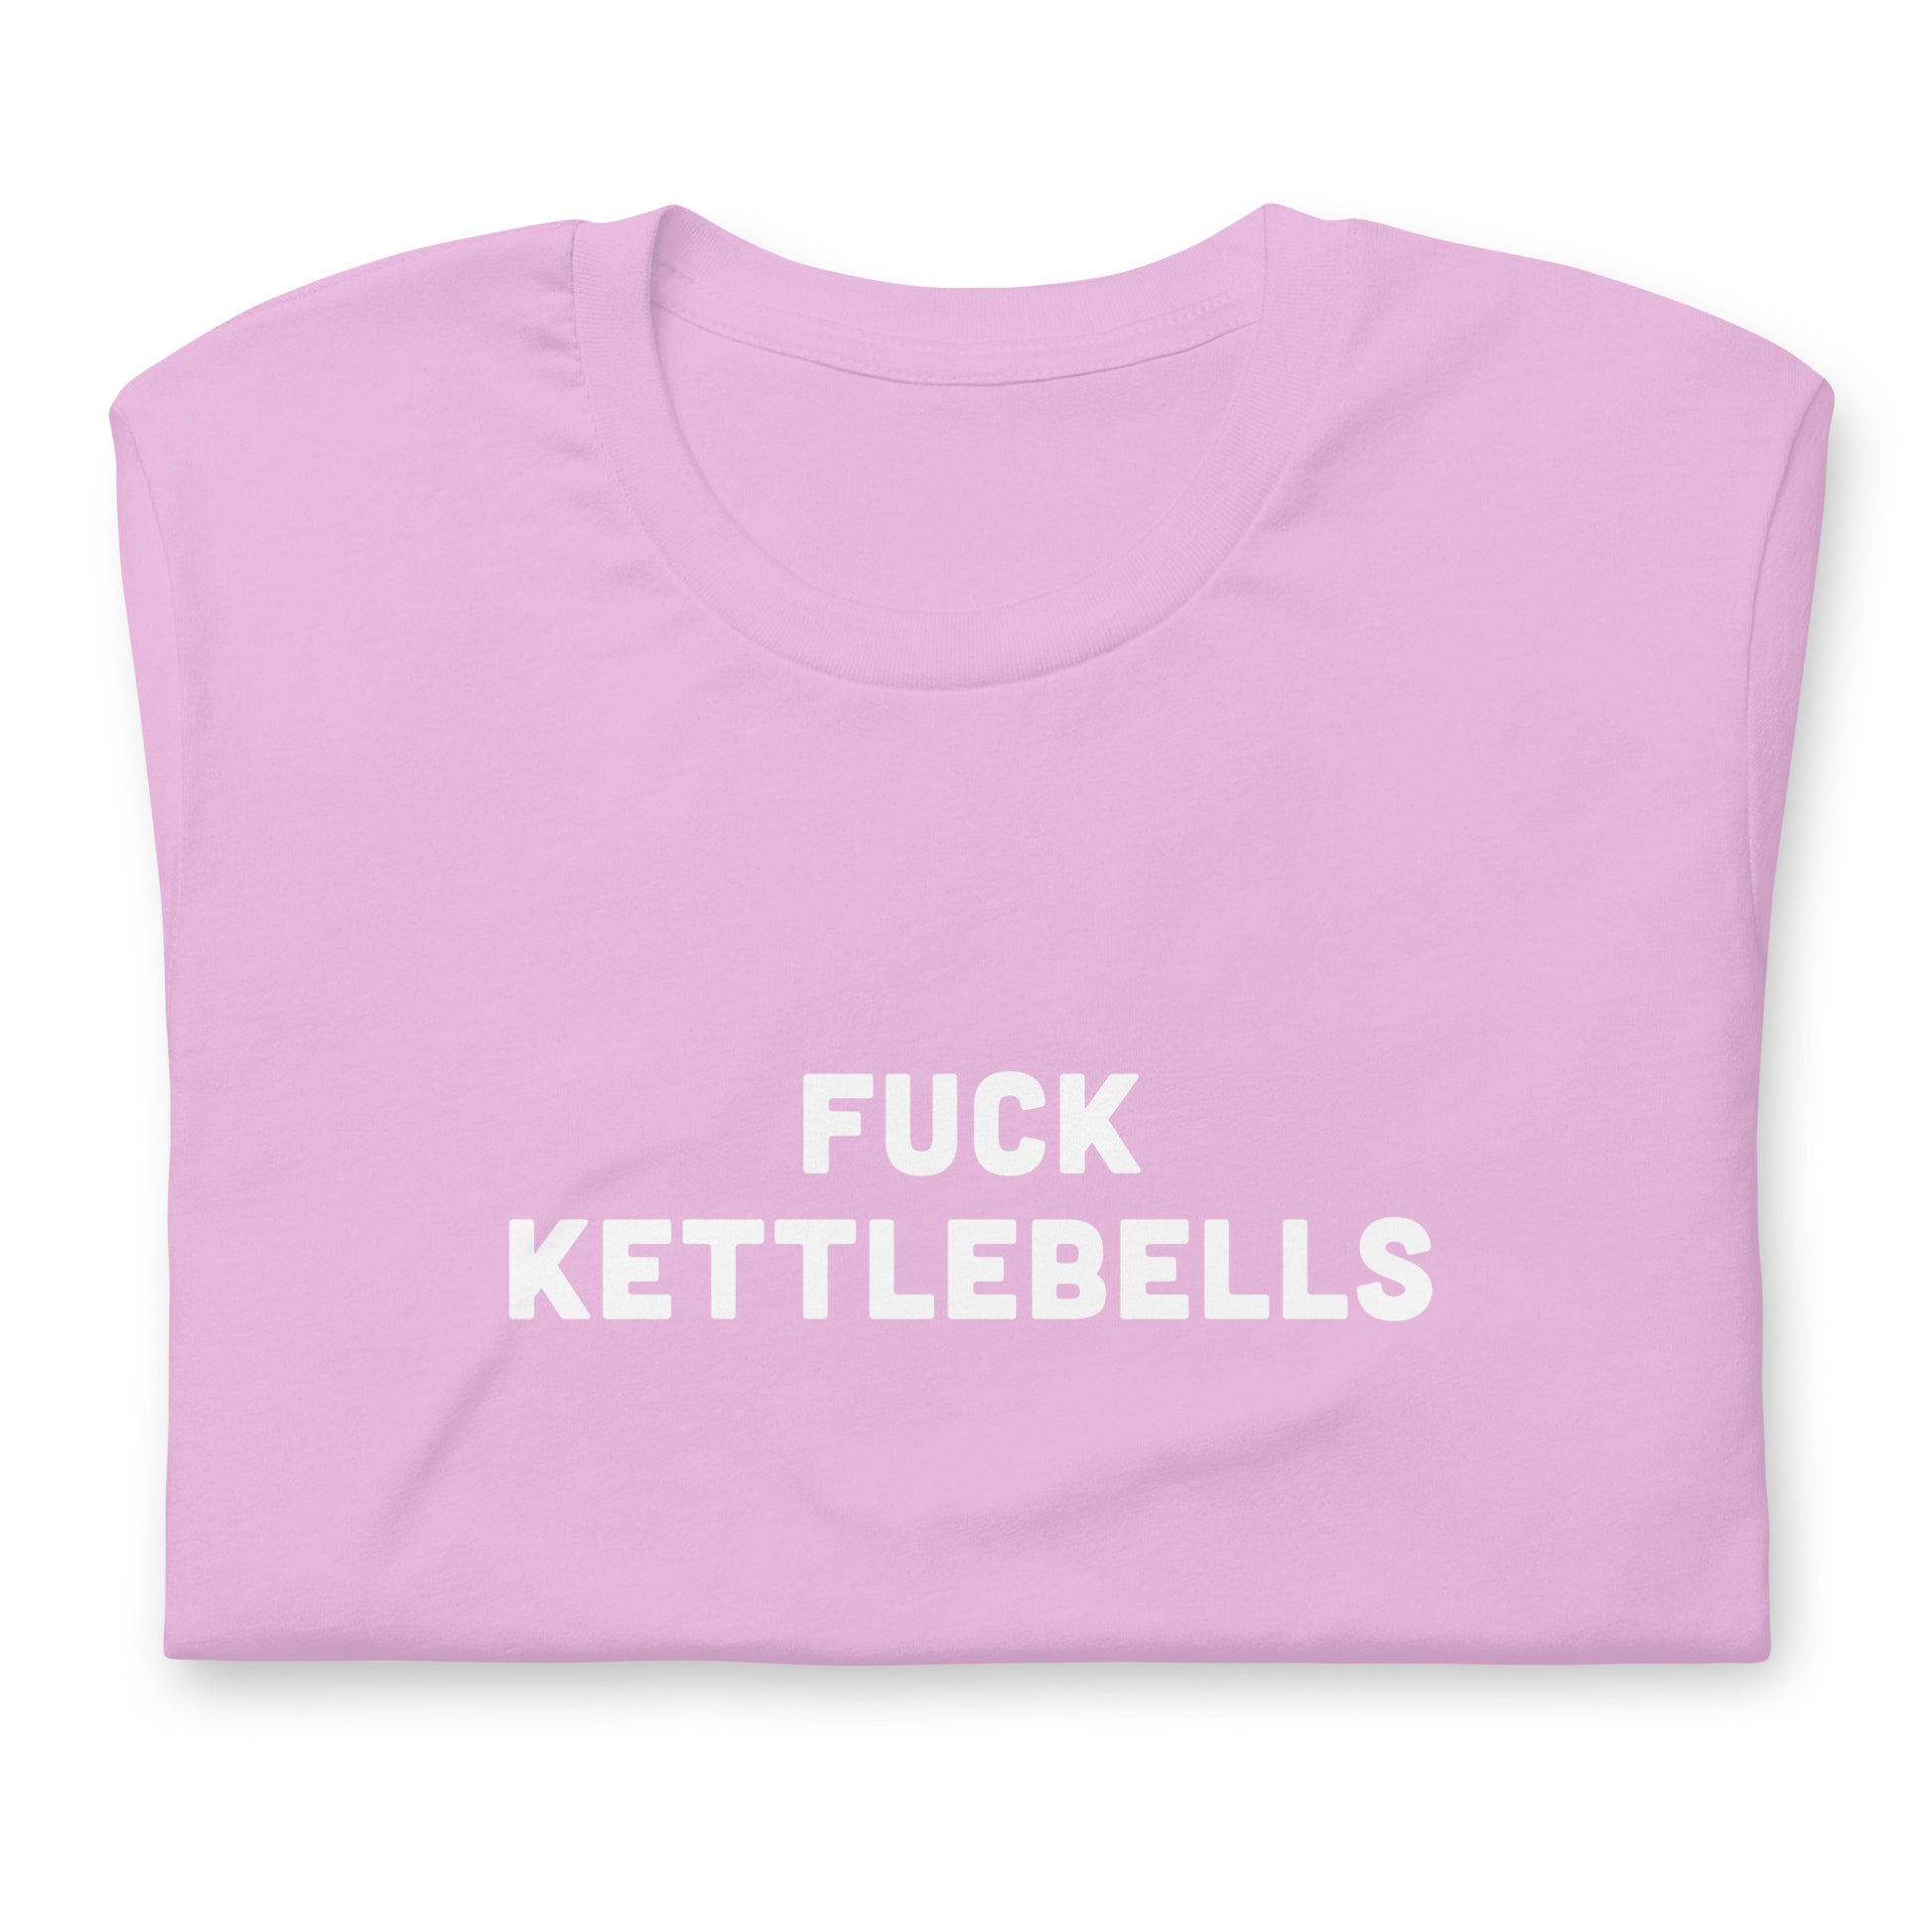 Fuck Kettlebells T-Shirt Size 2XL Color Forest